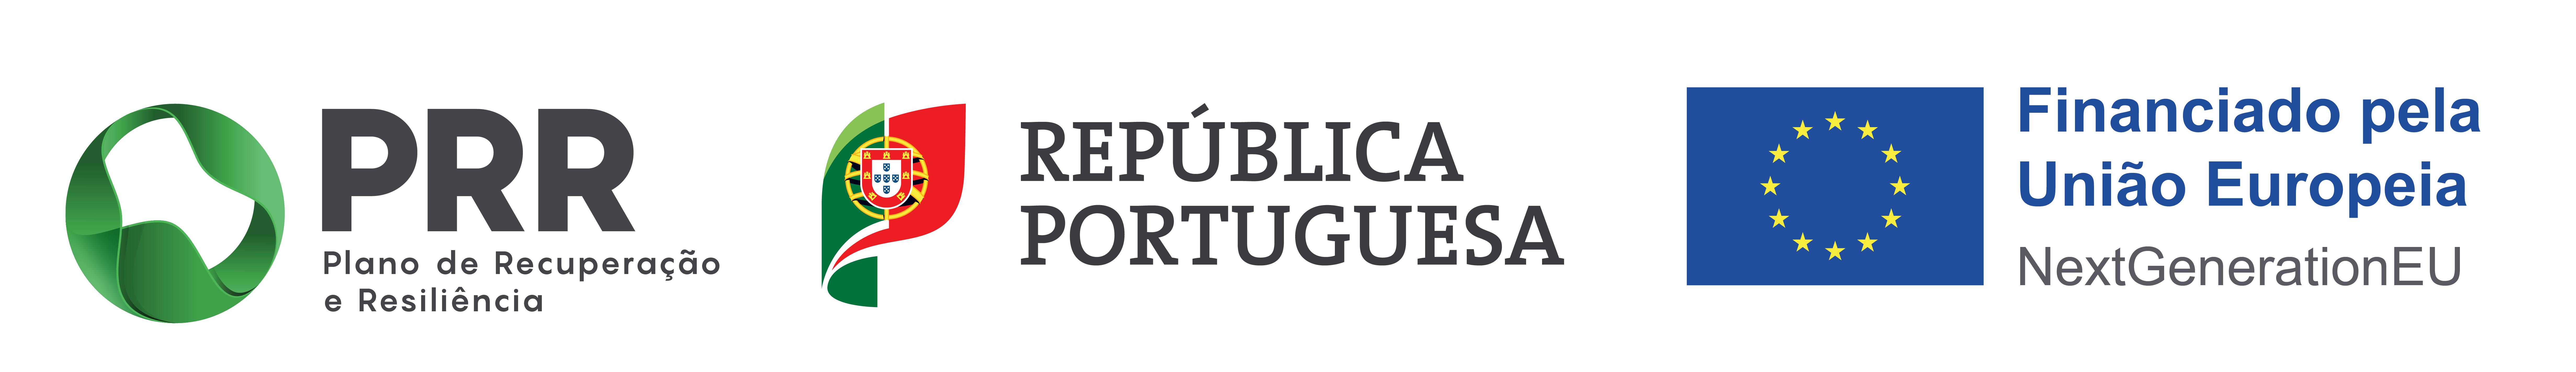 Financiamento PRR República Portuguesa NextGenerationEU